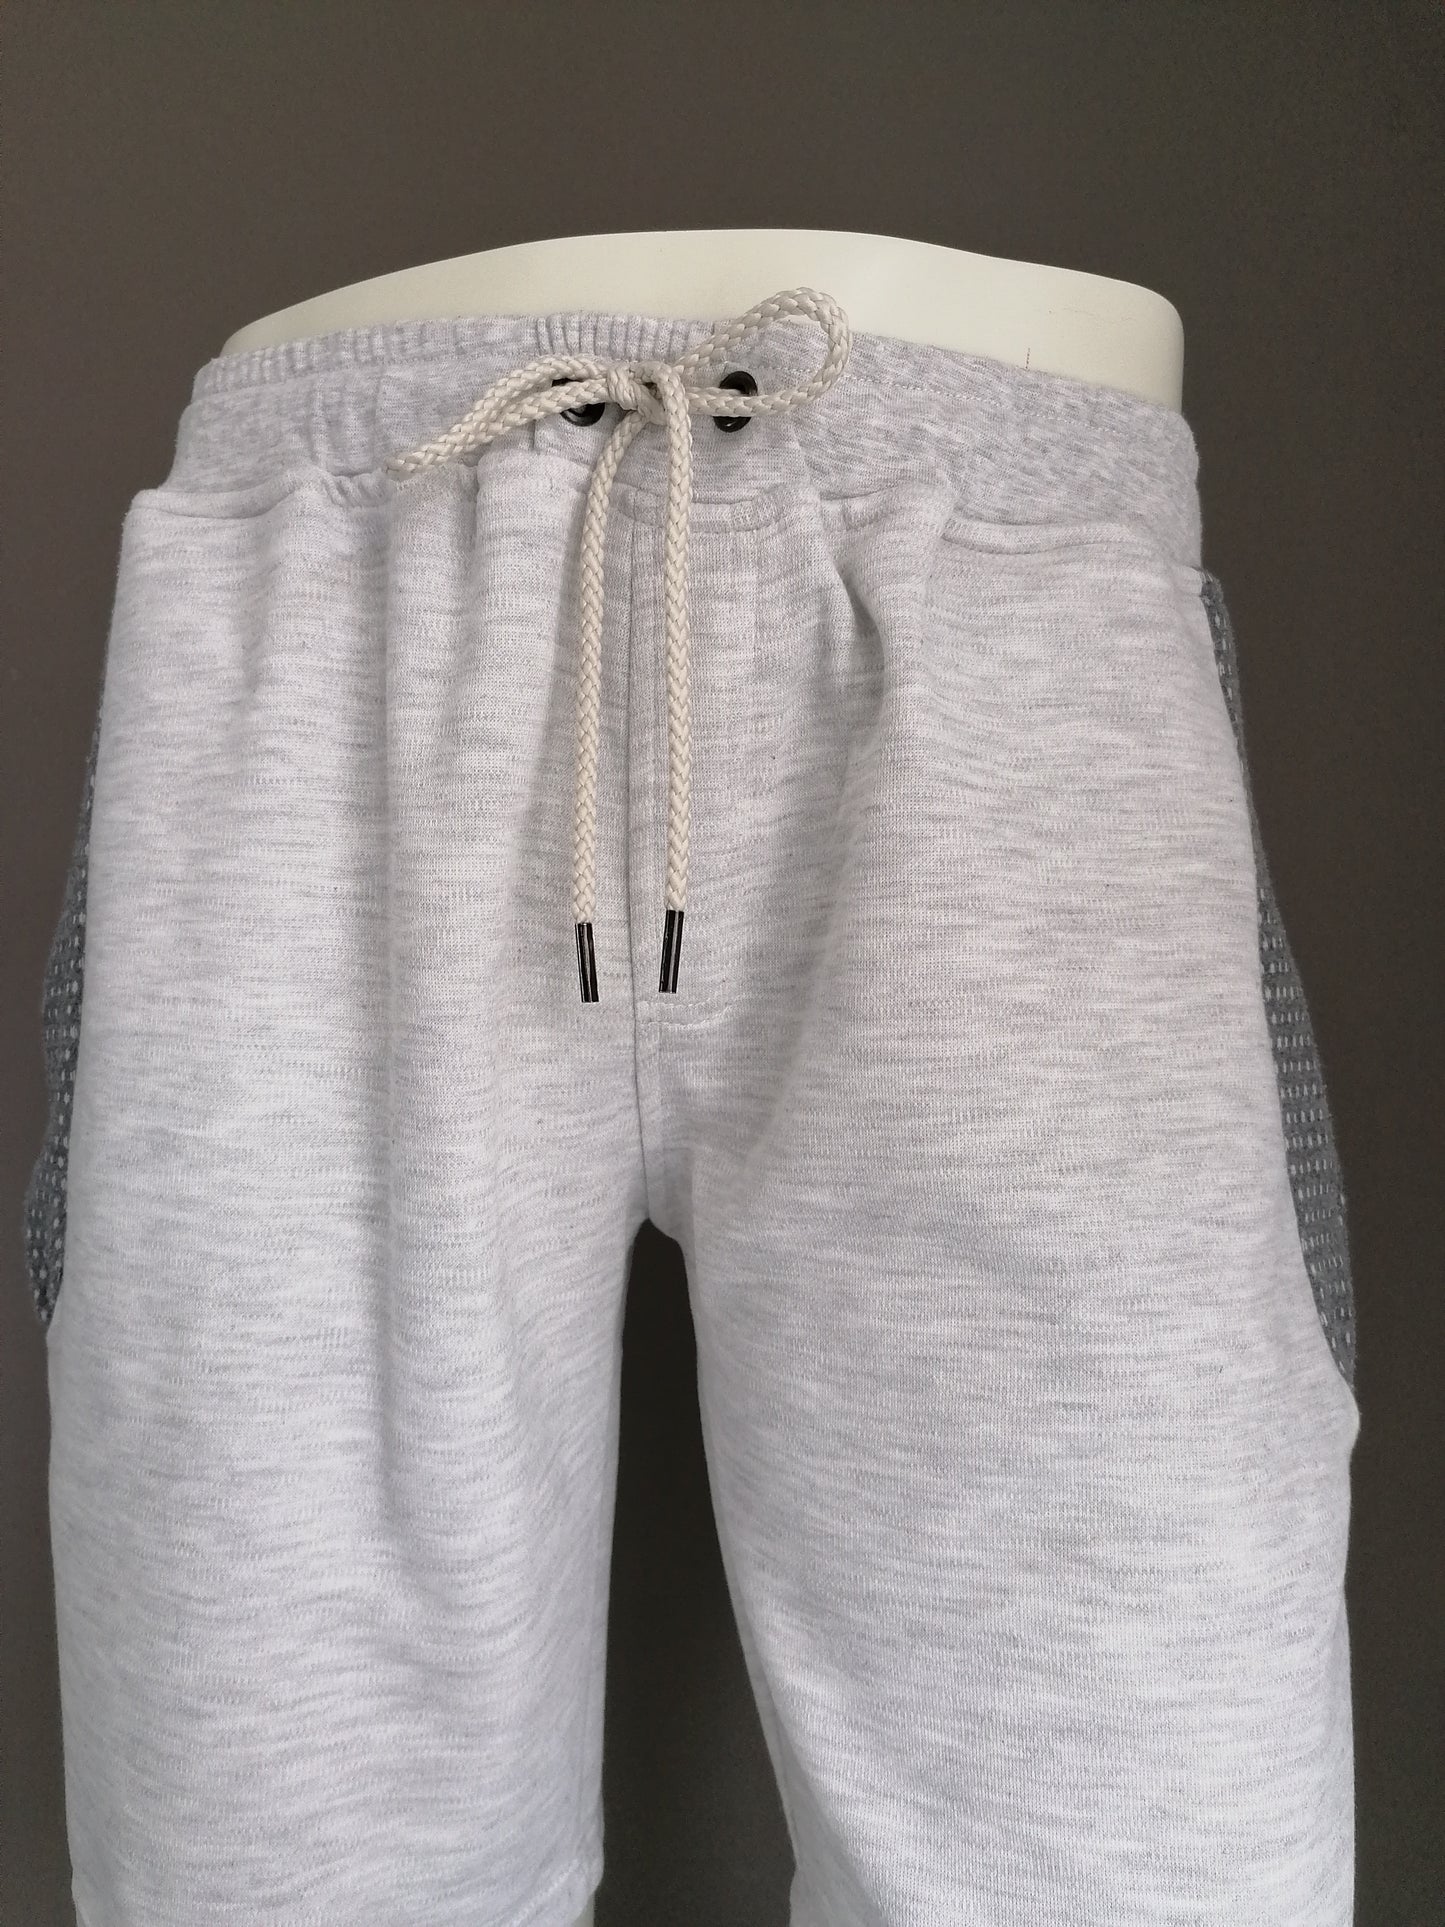 Defacto shorts. Sweat fabric. Gray mixed. Size M